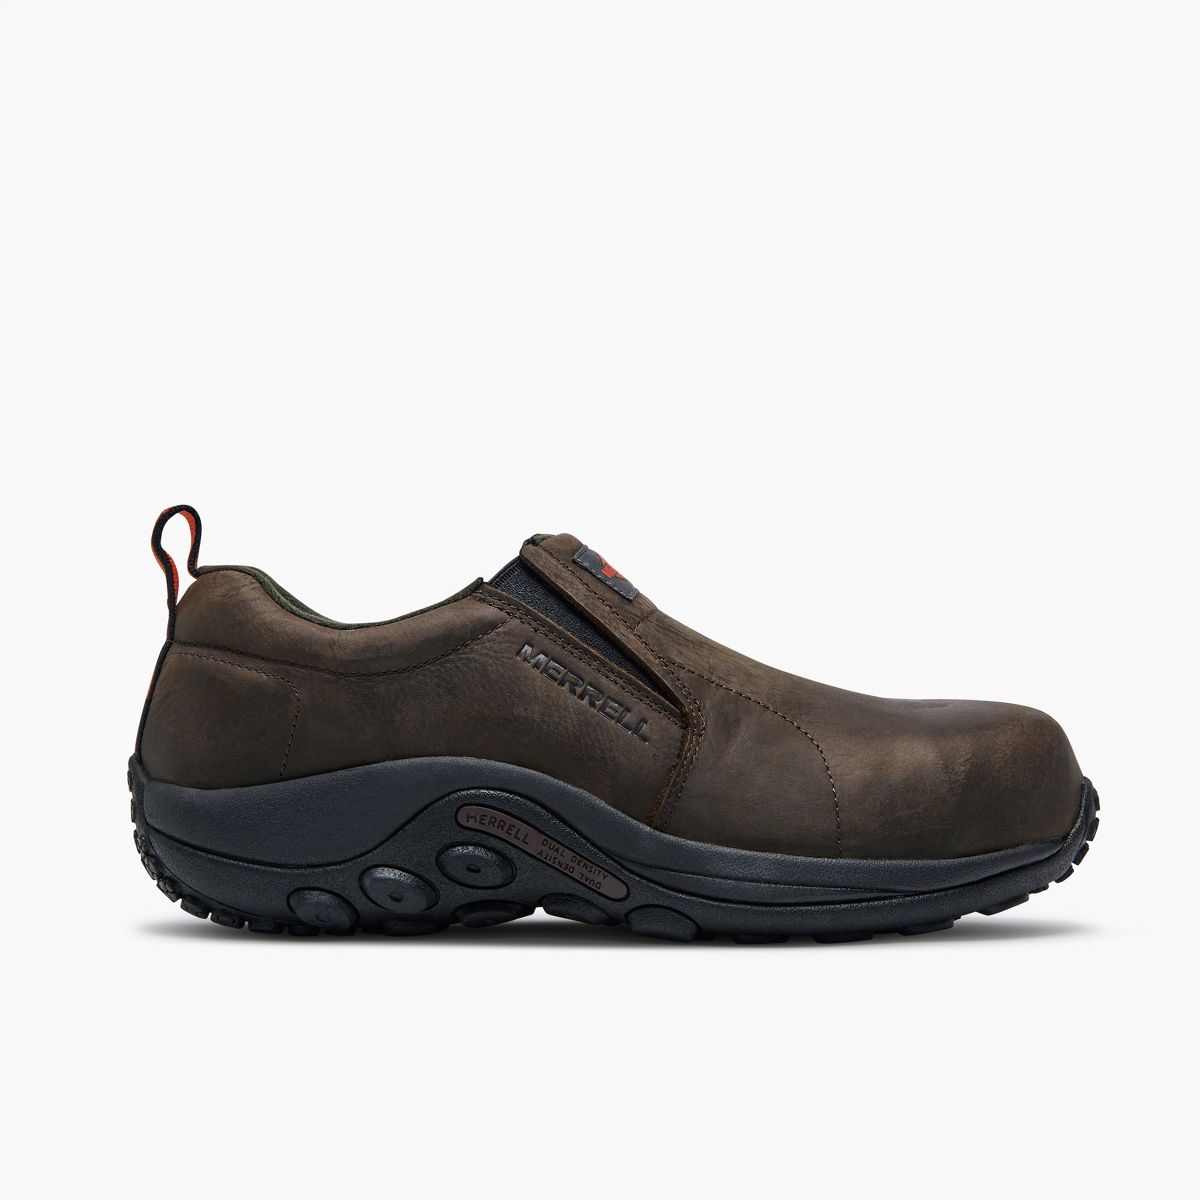 Shop Men's Jungle Moc Leather Comp Toe Shoes | Merrell